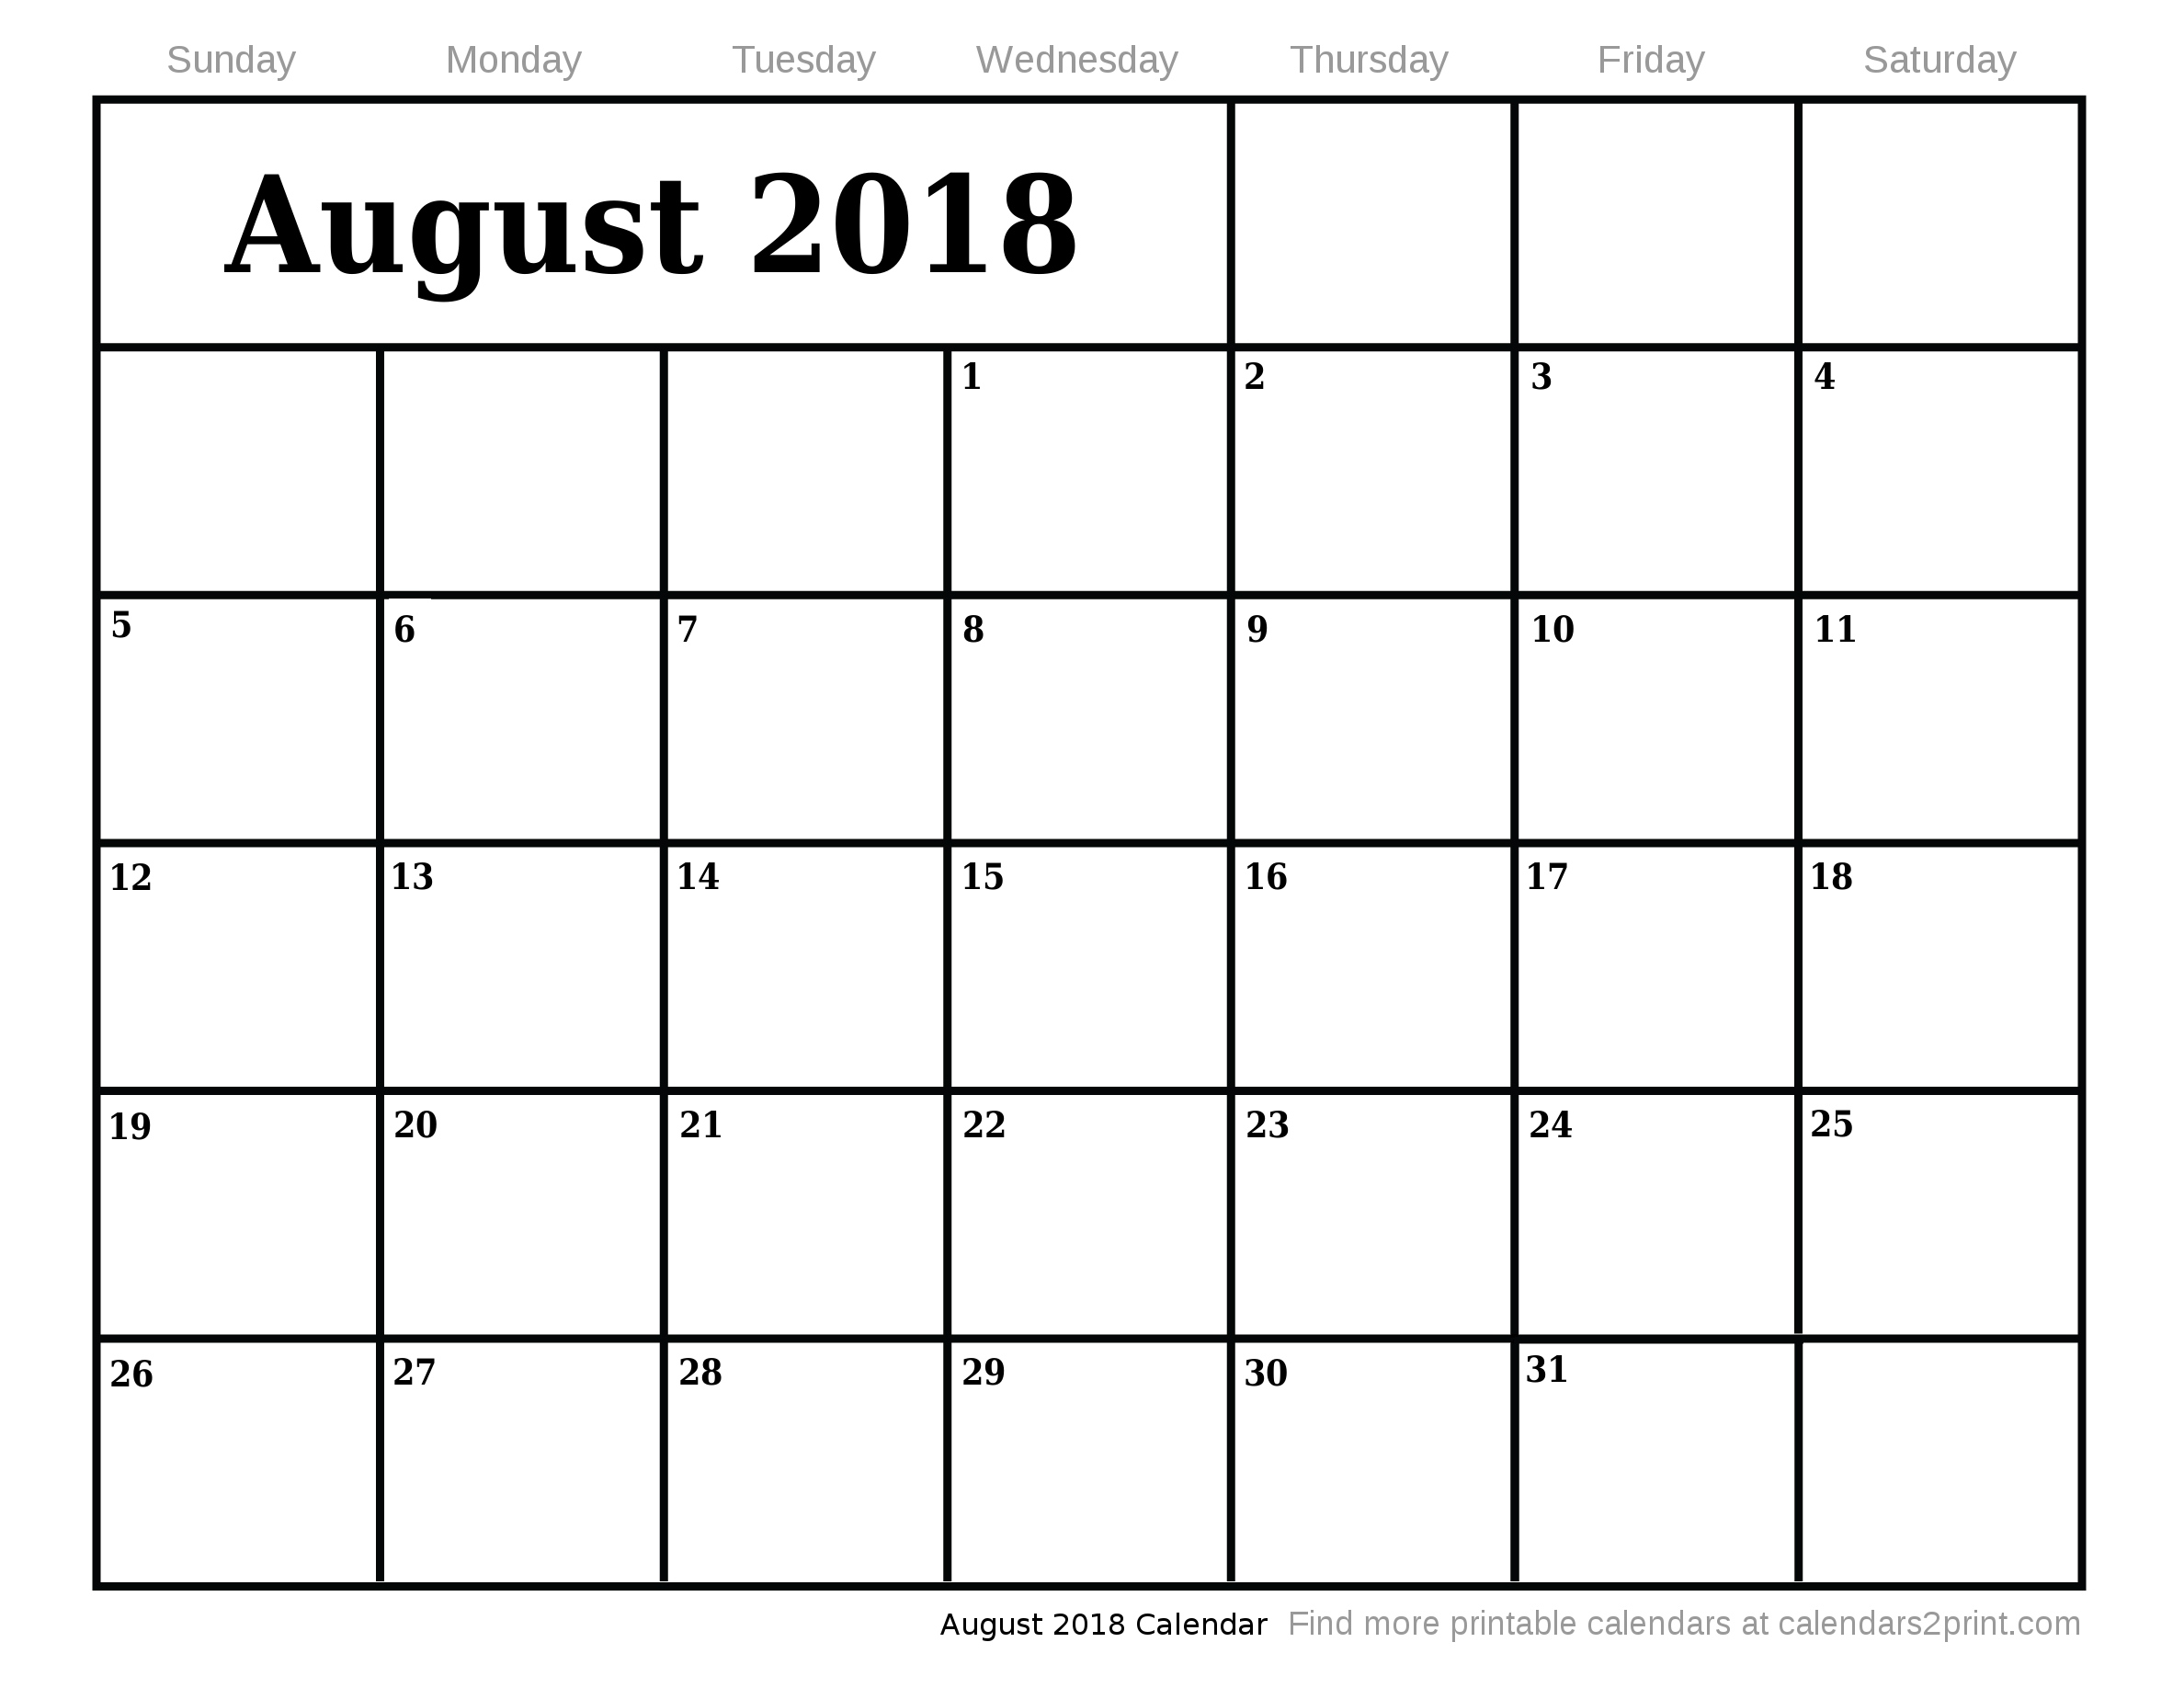 Aug 2018 Printable Calendar